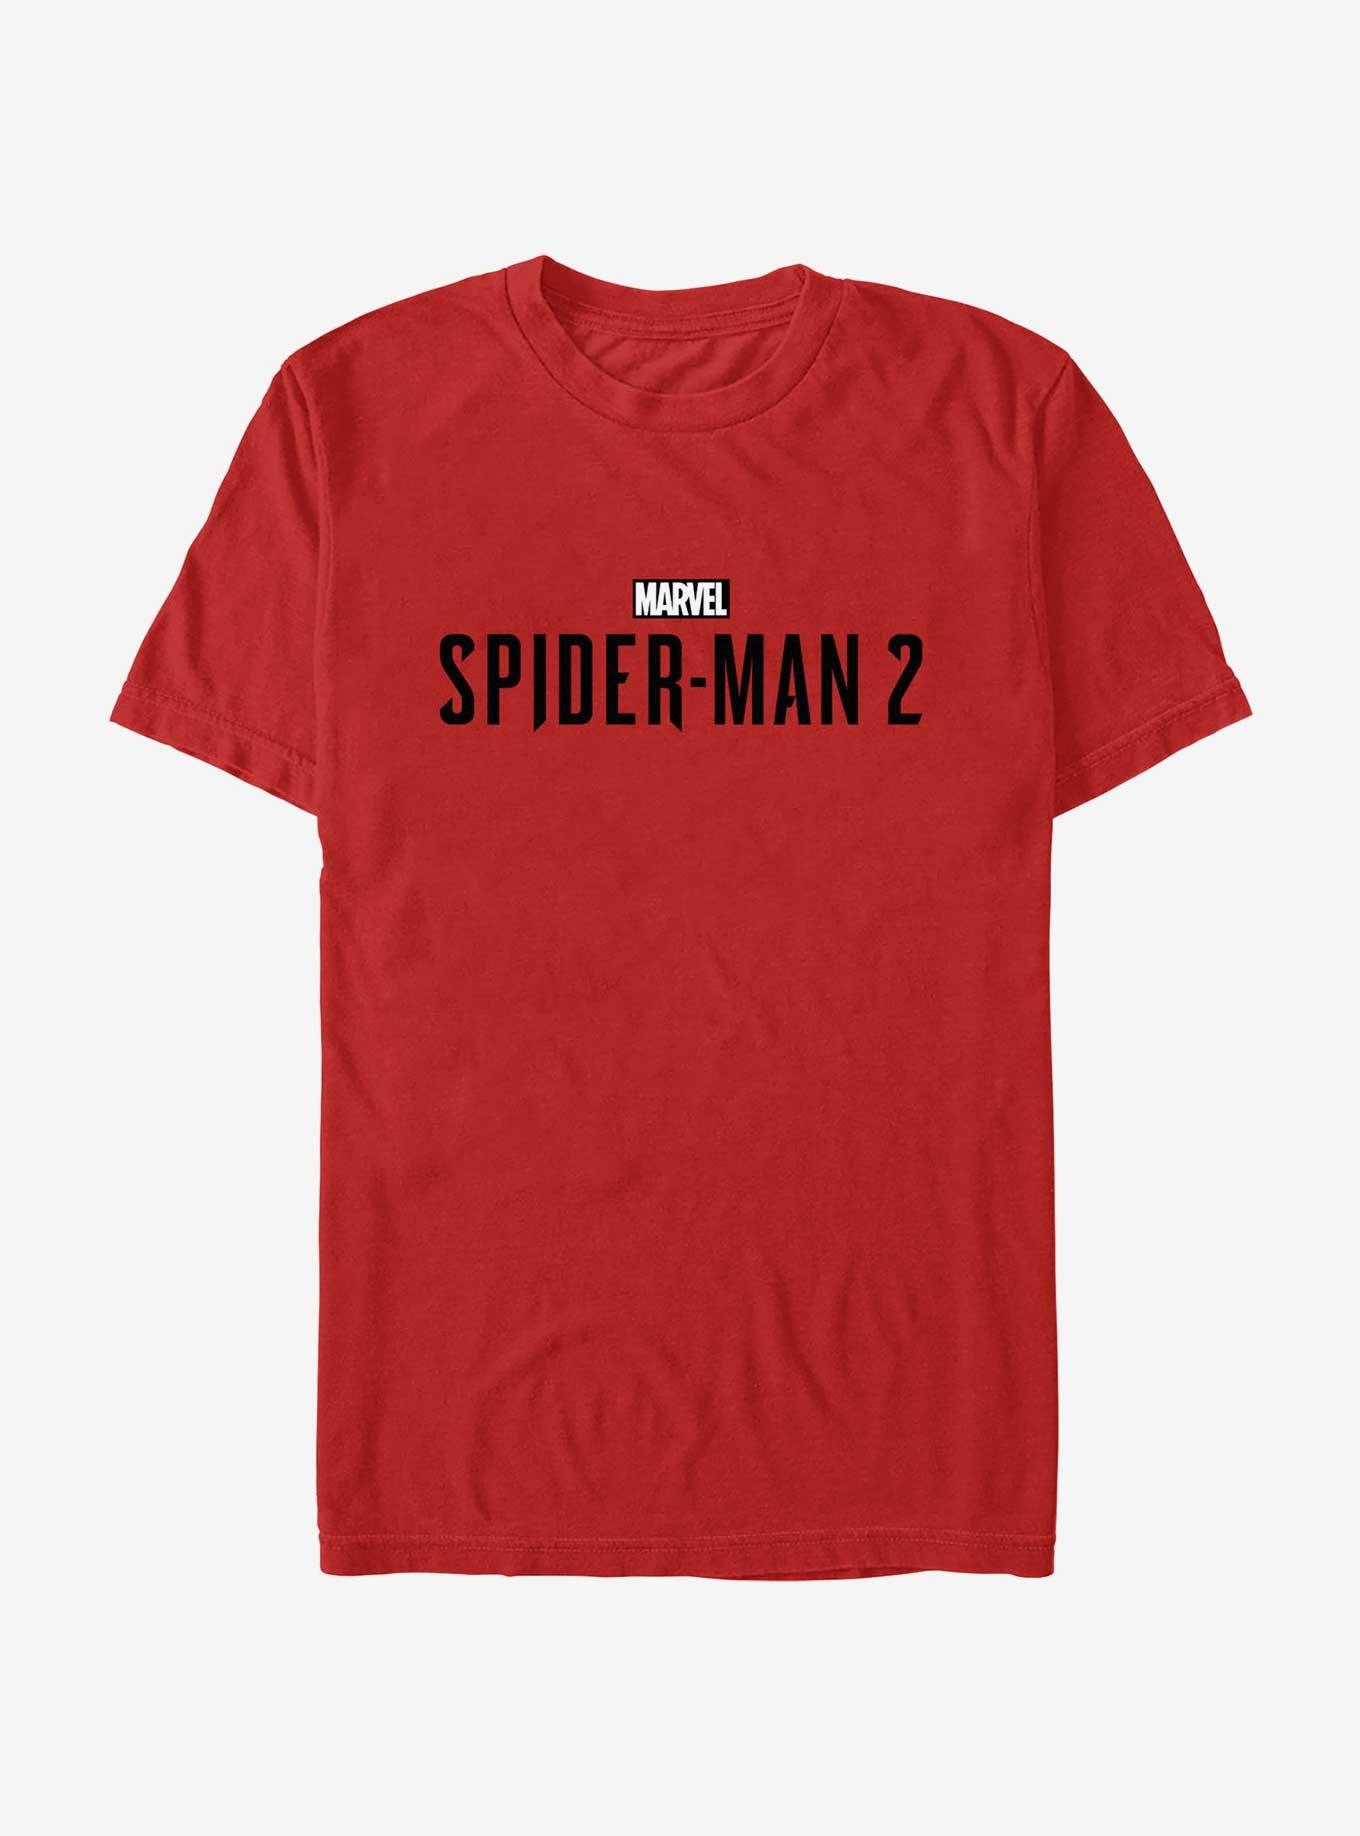 Marvel Spider-Man 2 Game Black Logo T-Shirt